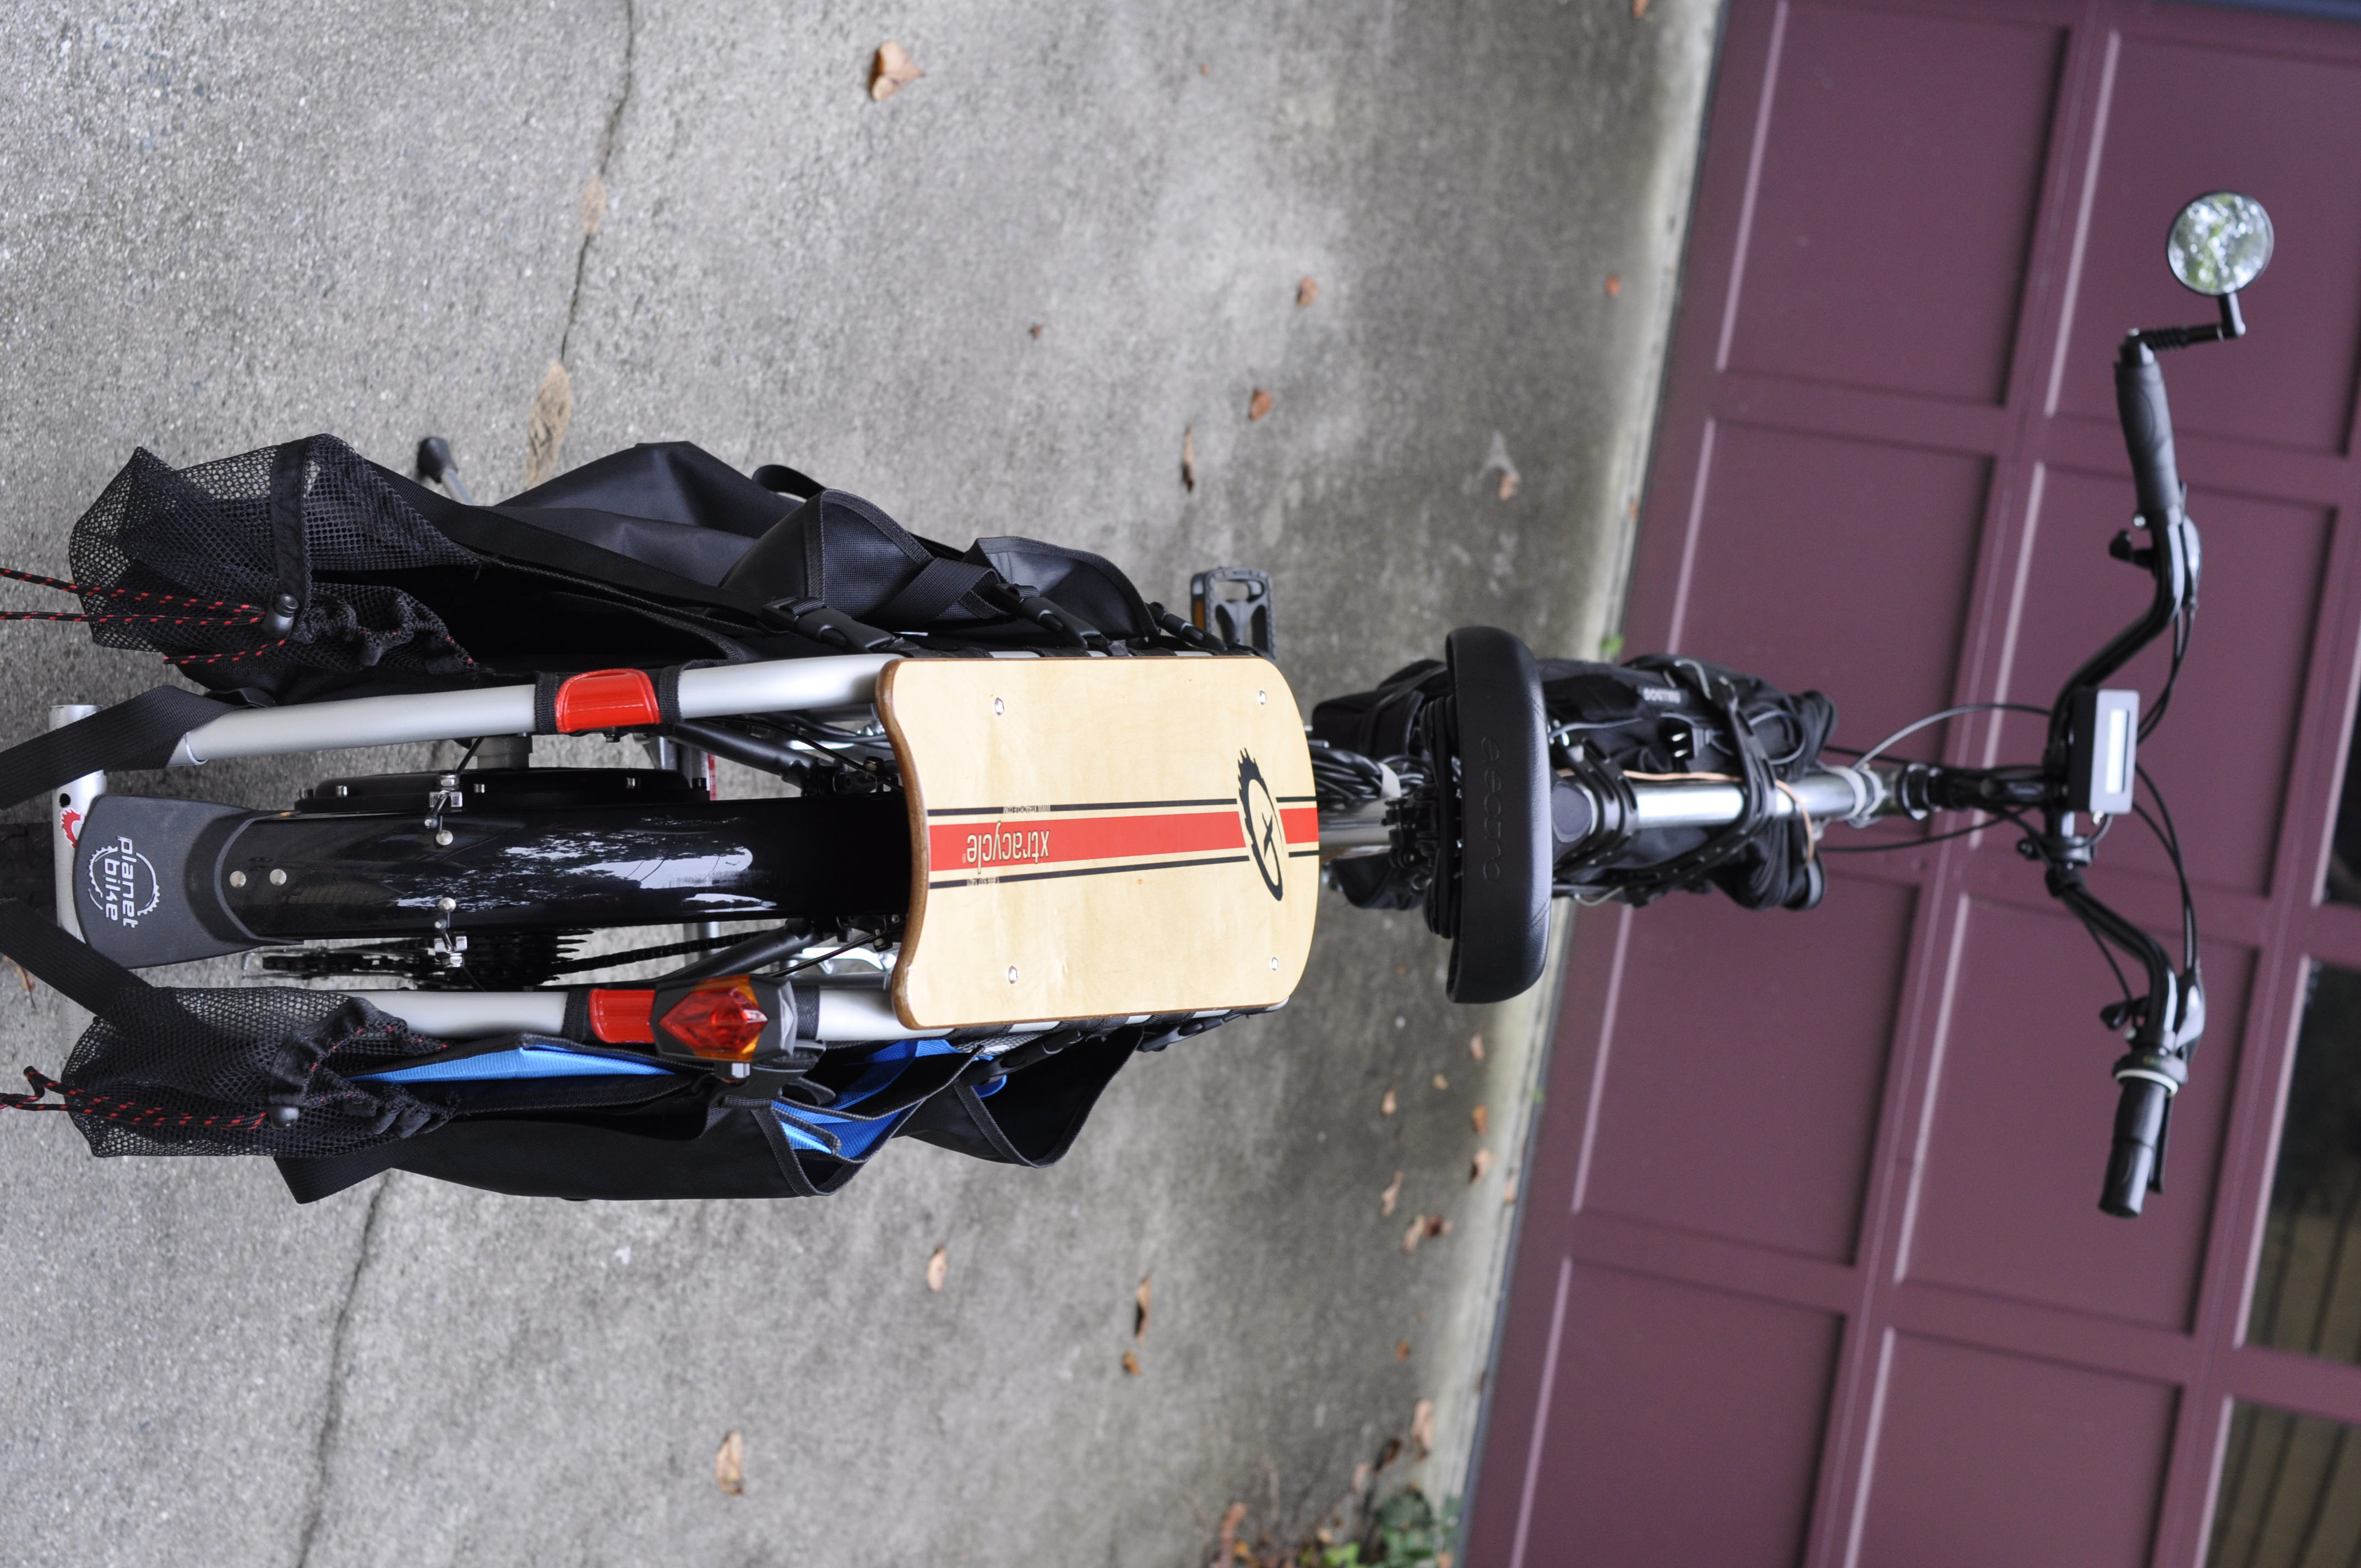 Second iteration cargo bike